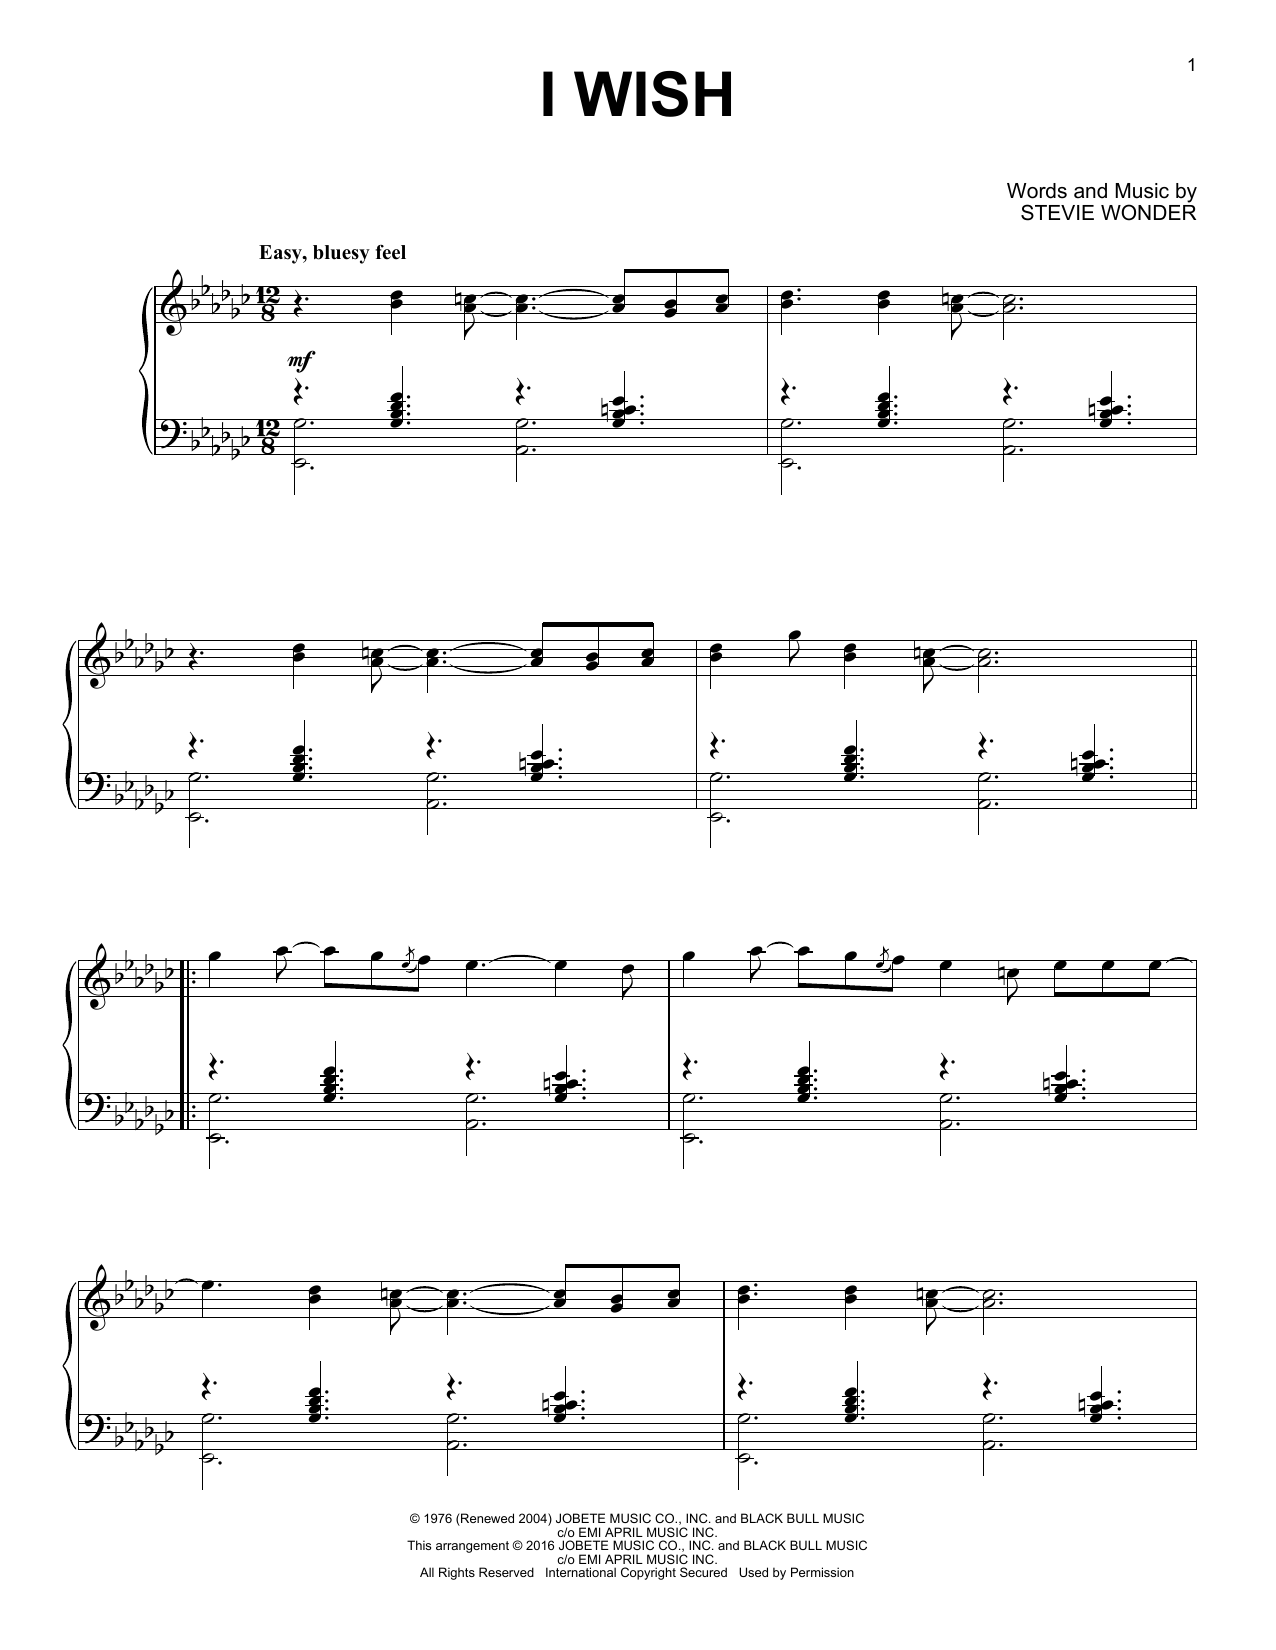 Stevie Wonder I Wish [Jazz version] Sheet Music Notes & Chords for Piano - Download or Print PDF